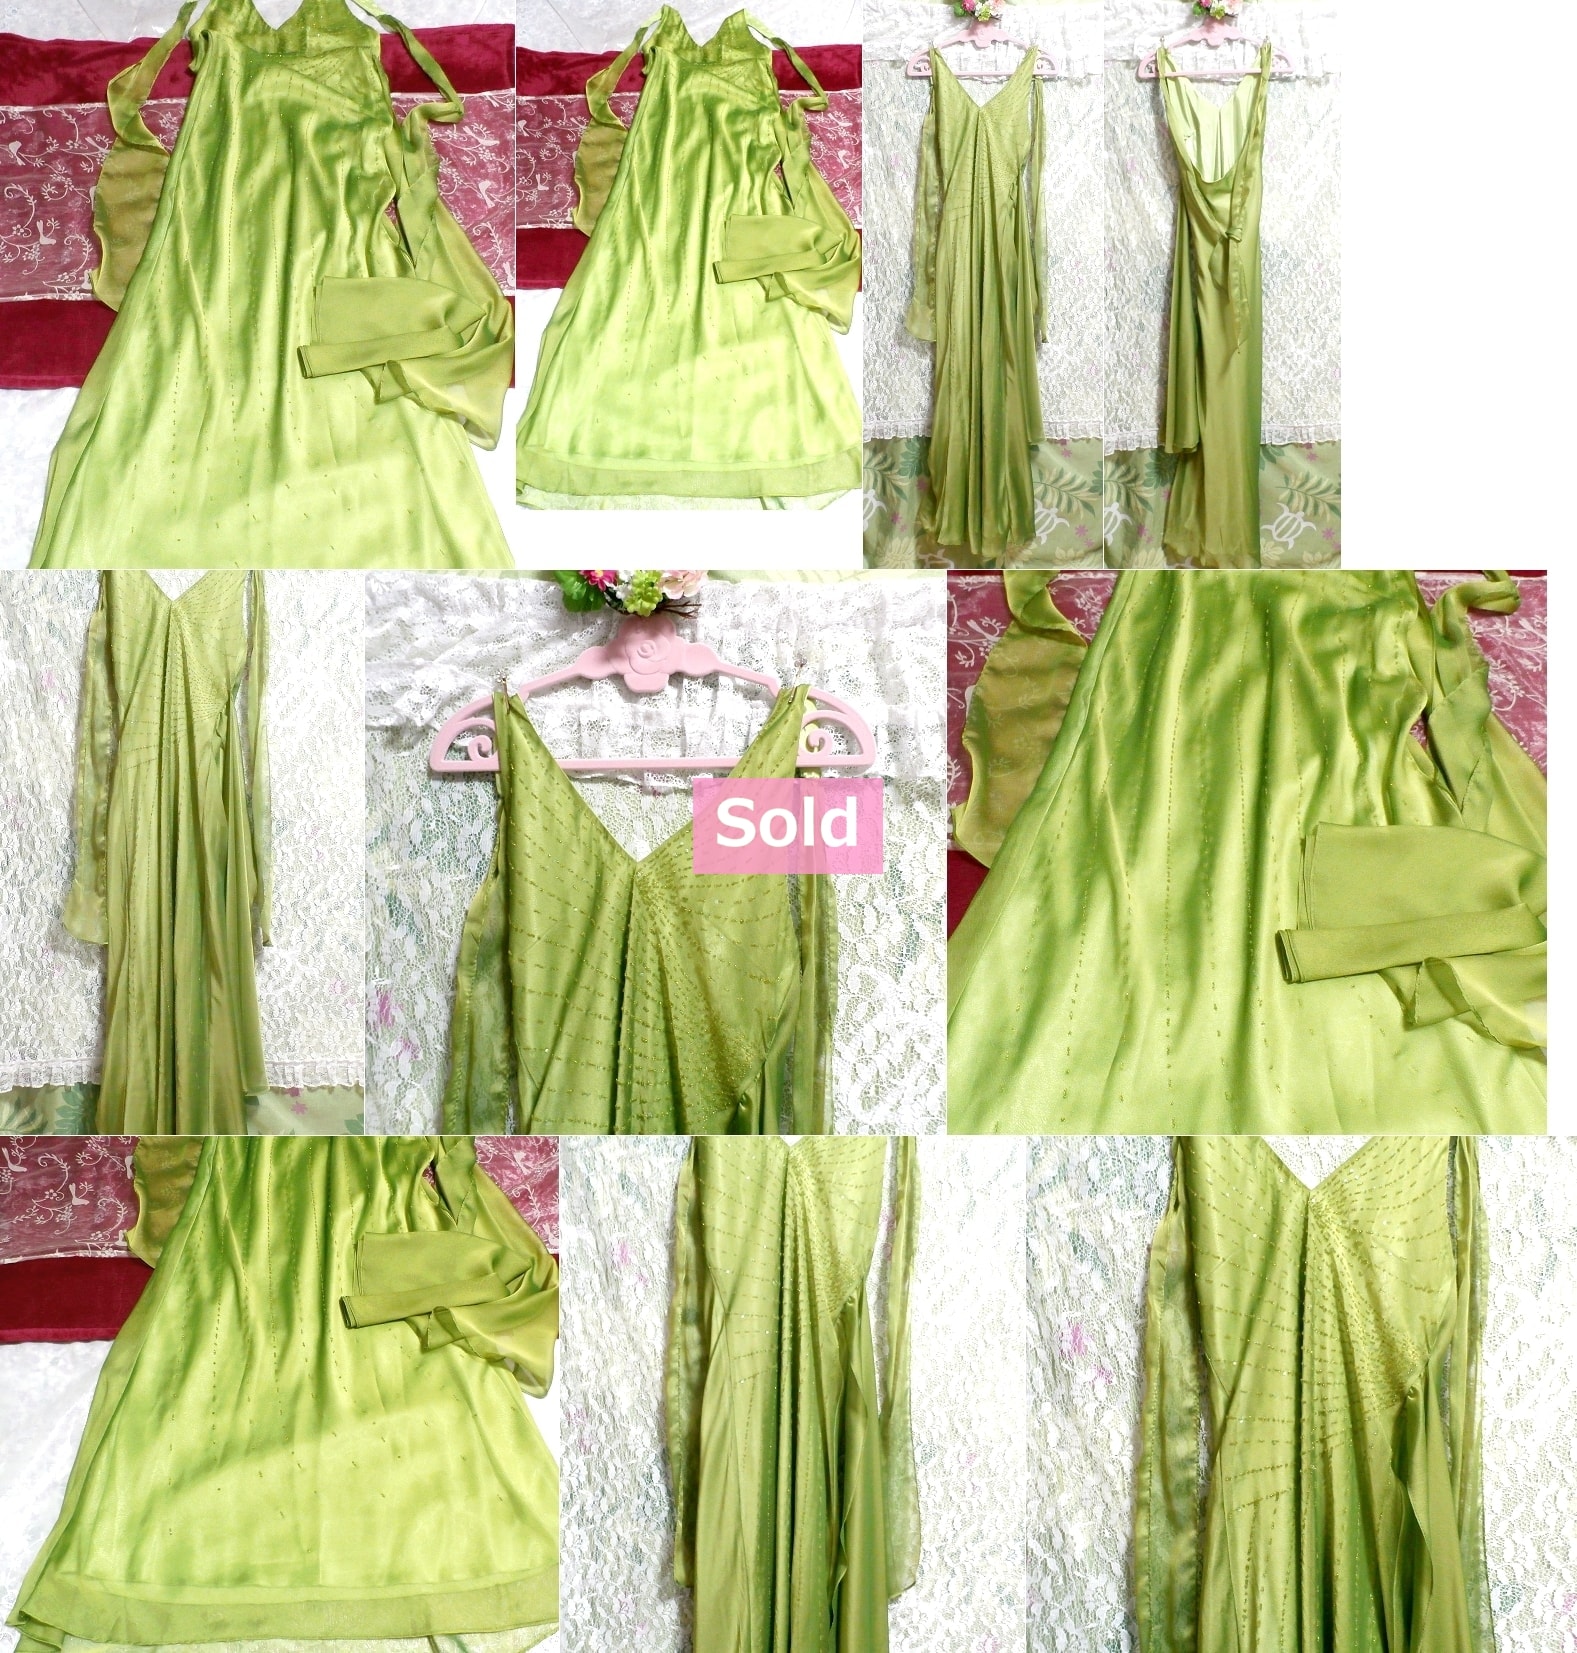 USA made in USA gloss green chiffon maxi long dress Made in USA gloss green chiffon maxi long dress